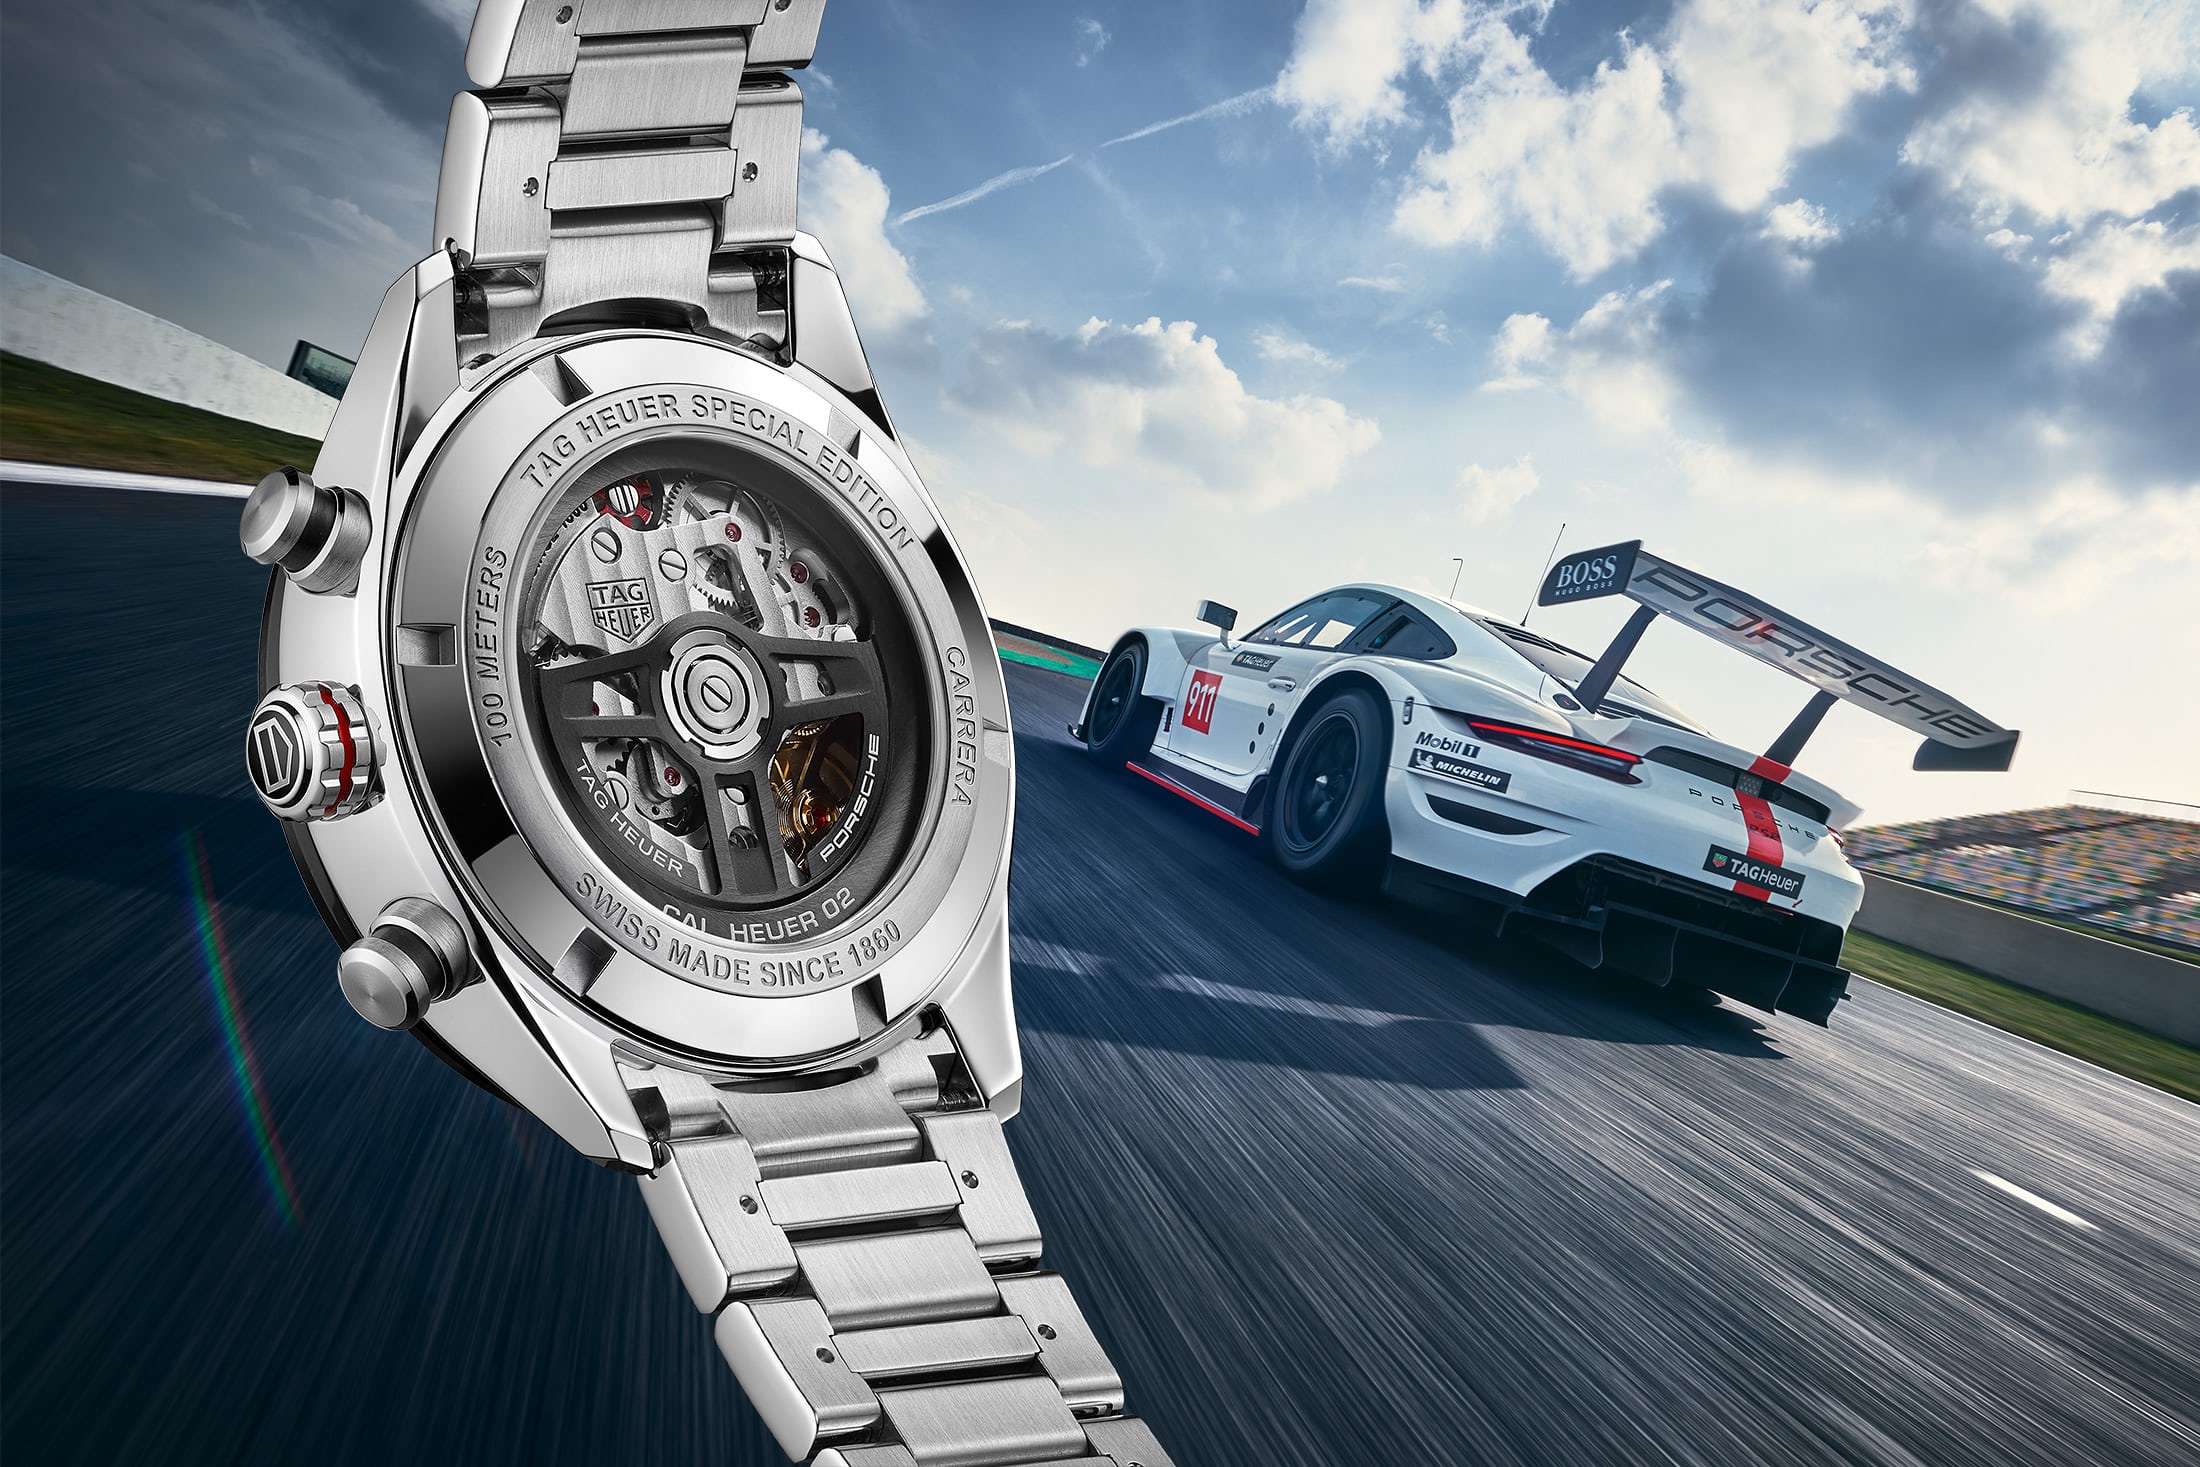 Porsche and TAG Heuer enter into strategic partnership - Porsche Newsroom